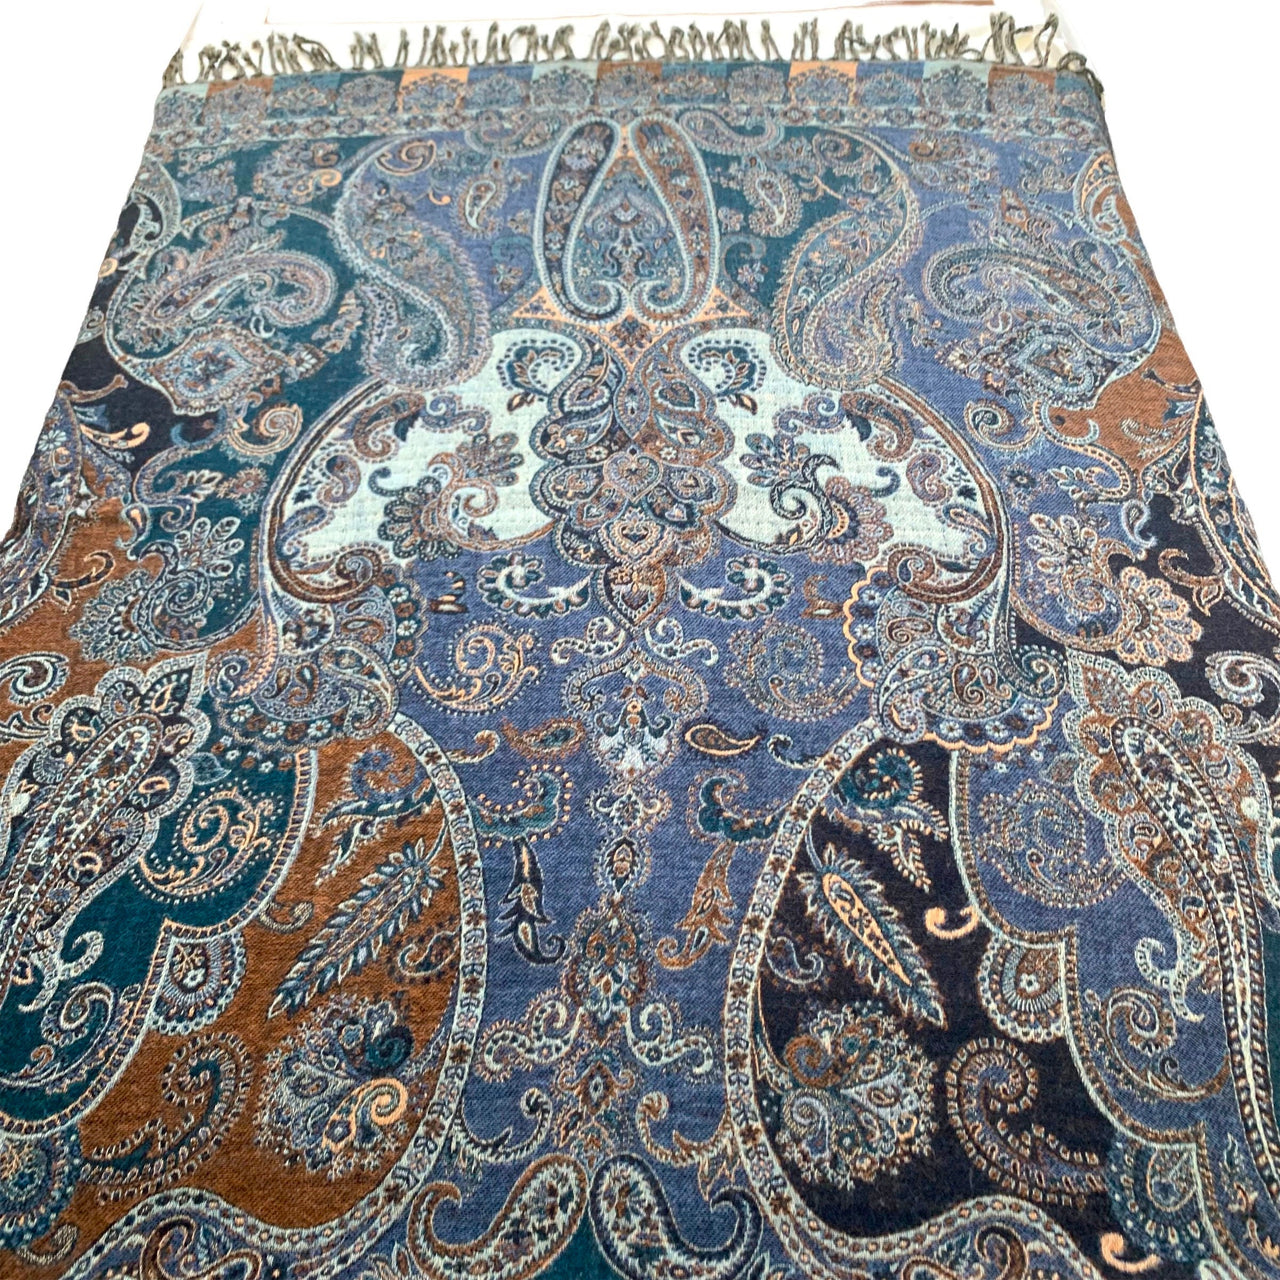 Blue Teal Multicoloured Paisley Boiled Wool Reversible Blanket Bed Throw Wrap